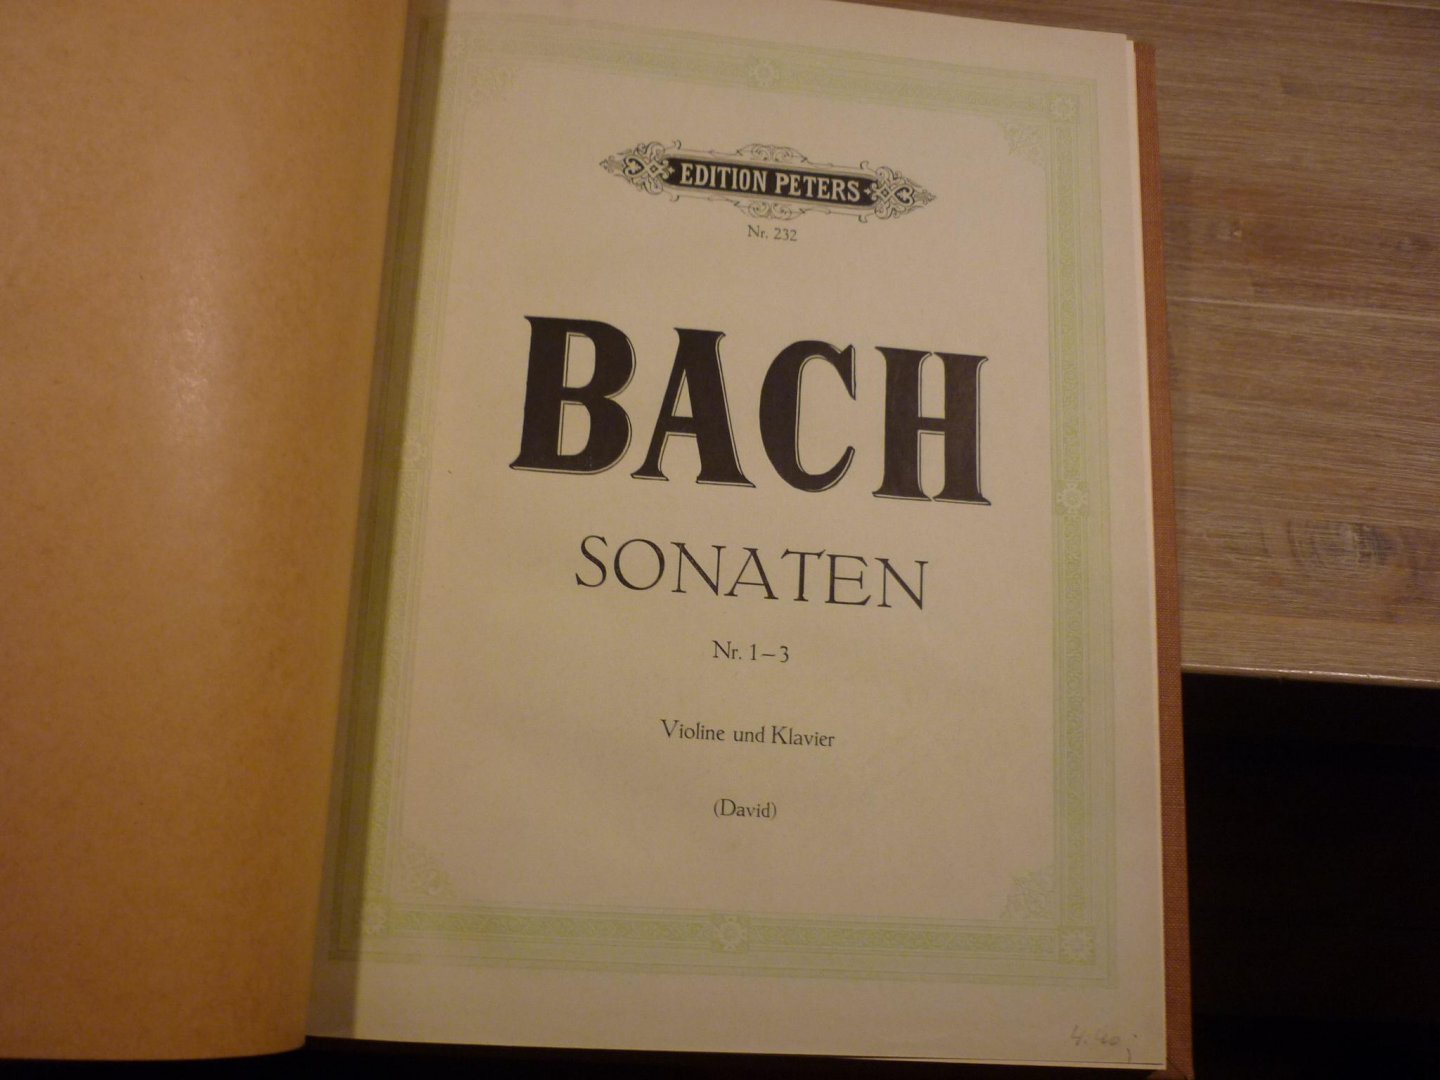 Bach; J. S. (1685-1750) - Sonaten Nr. 1 - 3 voor Viool + Klavecimbel (piano)  //   Sonaten Nr. 4 - 6 voor Viool + Klavecimbel (piano) - herausgegeben von Fred. David